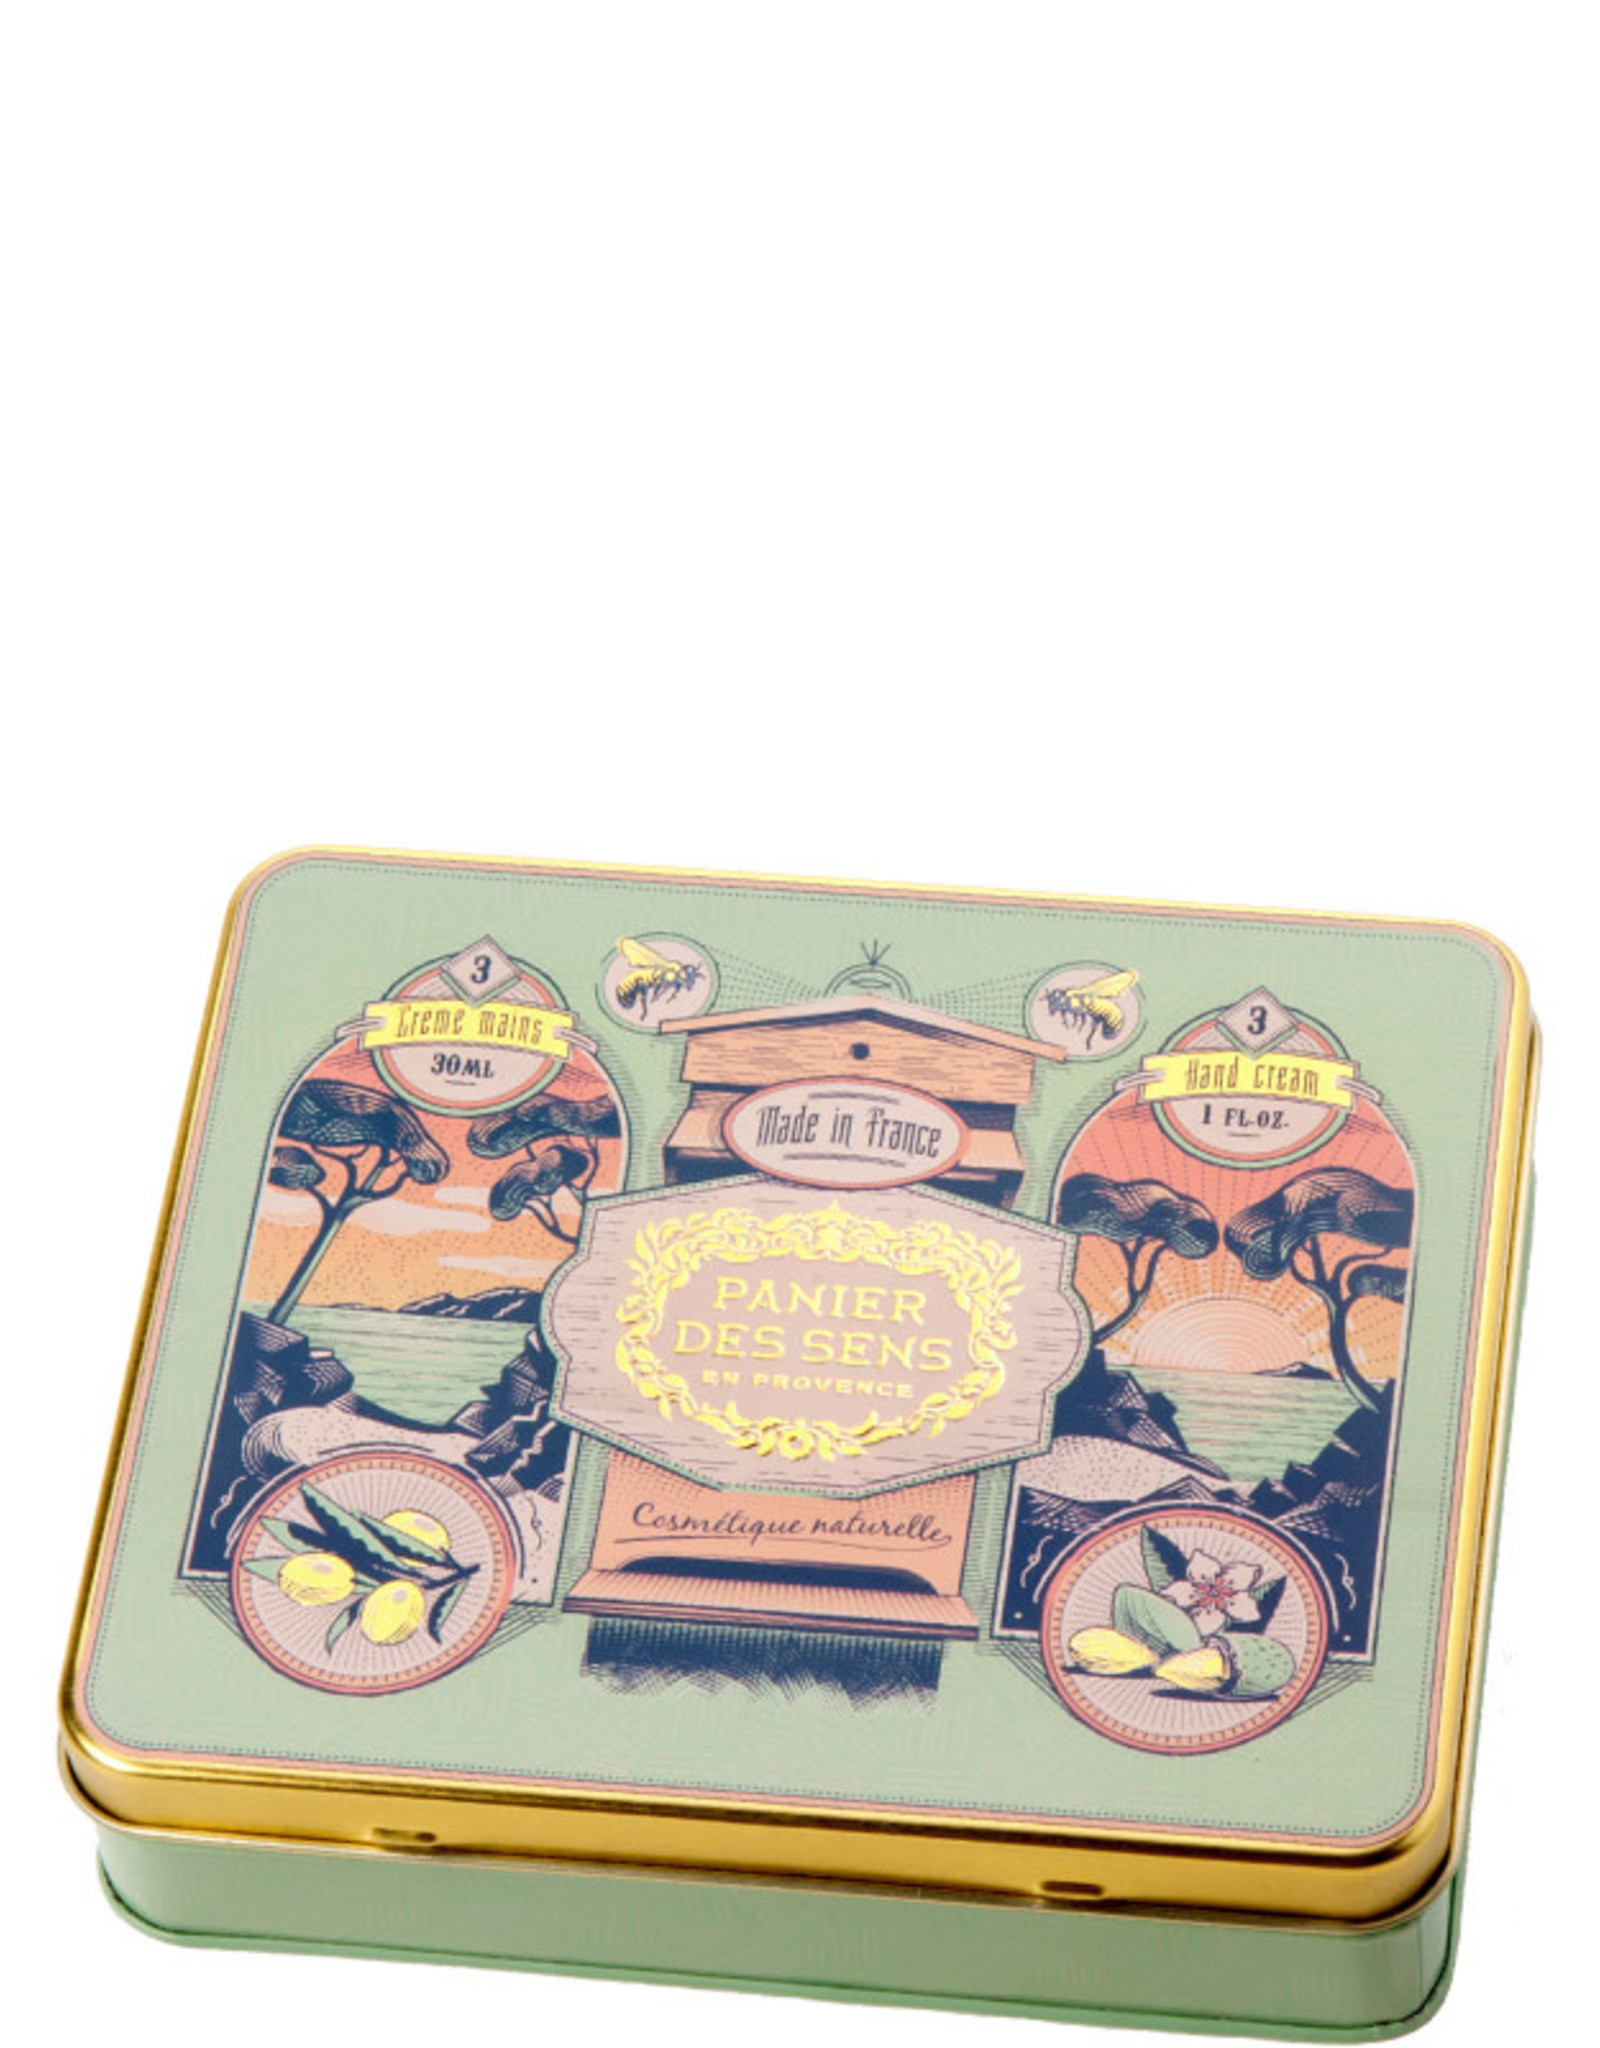 Panier Des Sens Timeless Hands Tin Gift Set - Honey, Almond & Grape Hand Creams.  Panier Des Sens